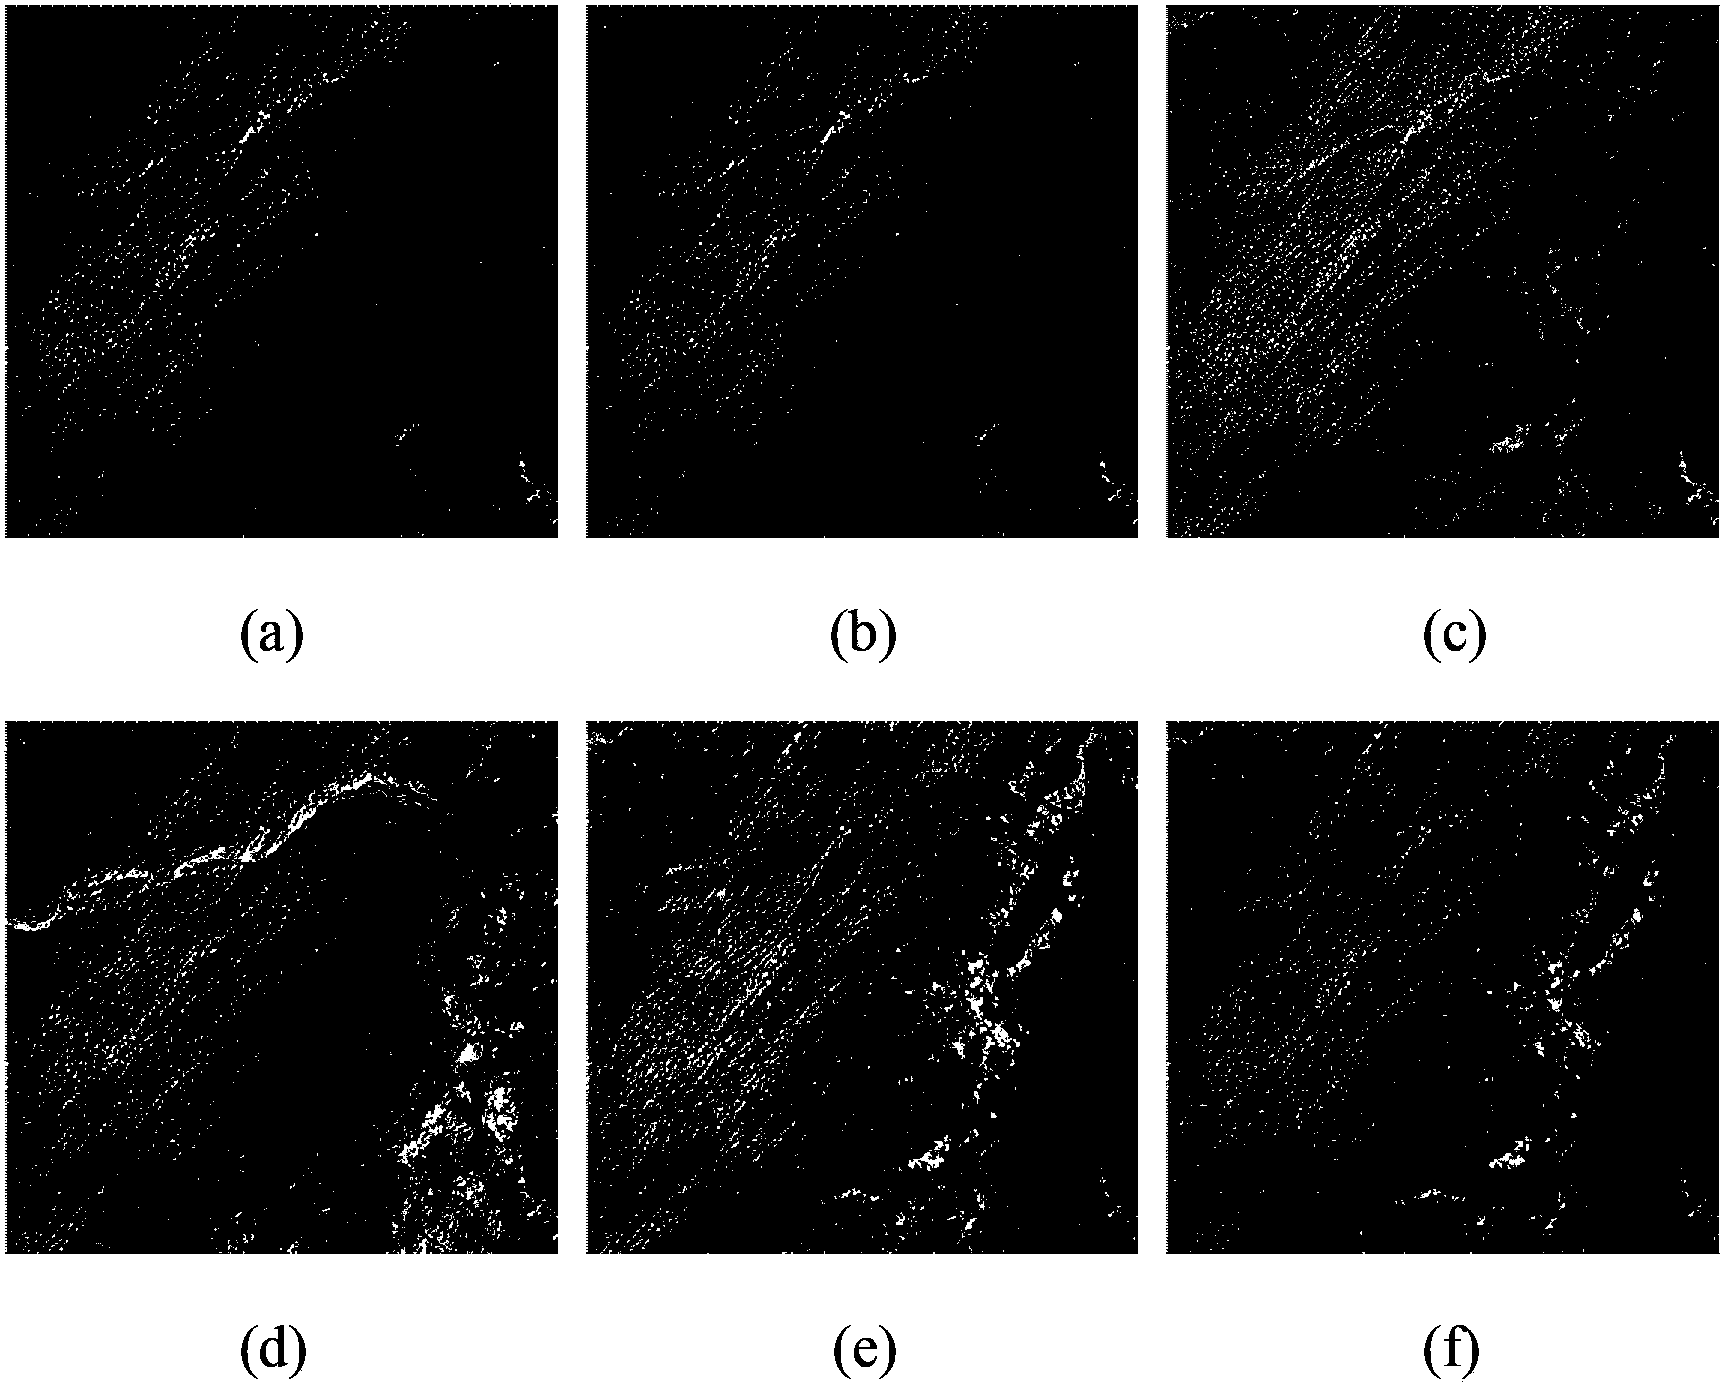 Method for detecting spissatus and spissatus shadow based on Landsat thematic mapper (TM) images and Landsat enhanced thematic mapper (ETM) images